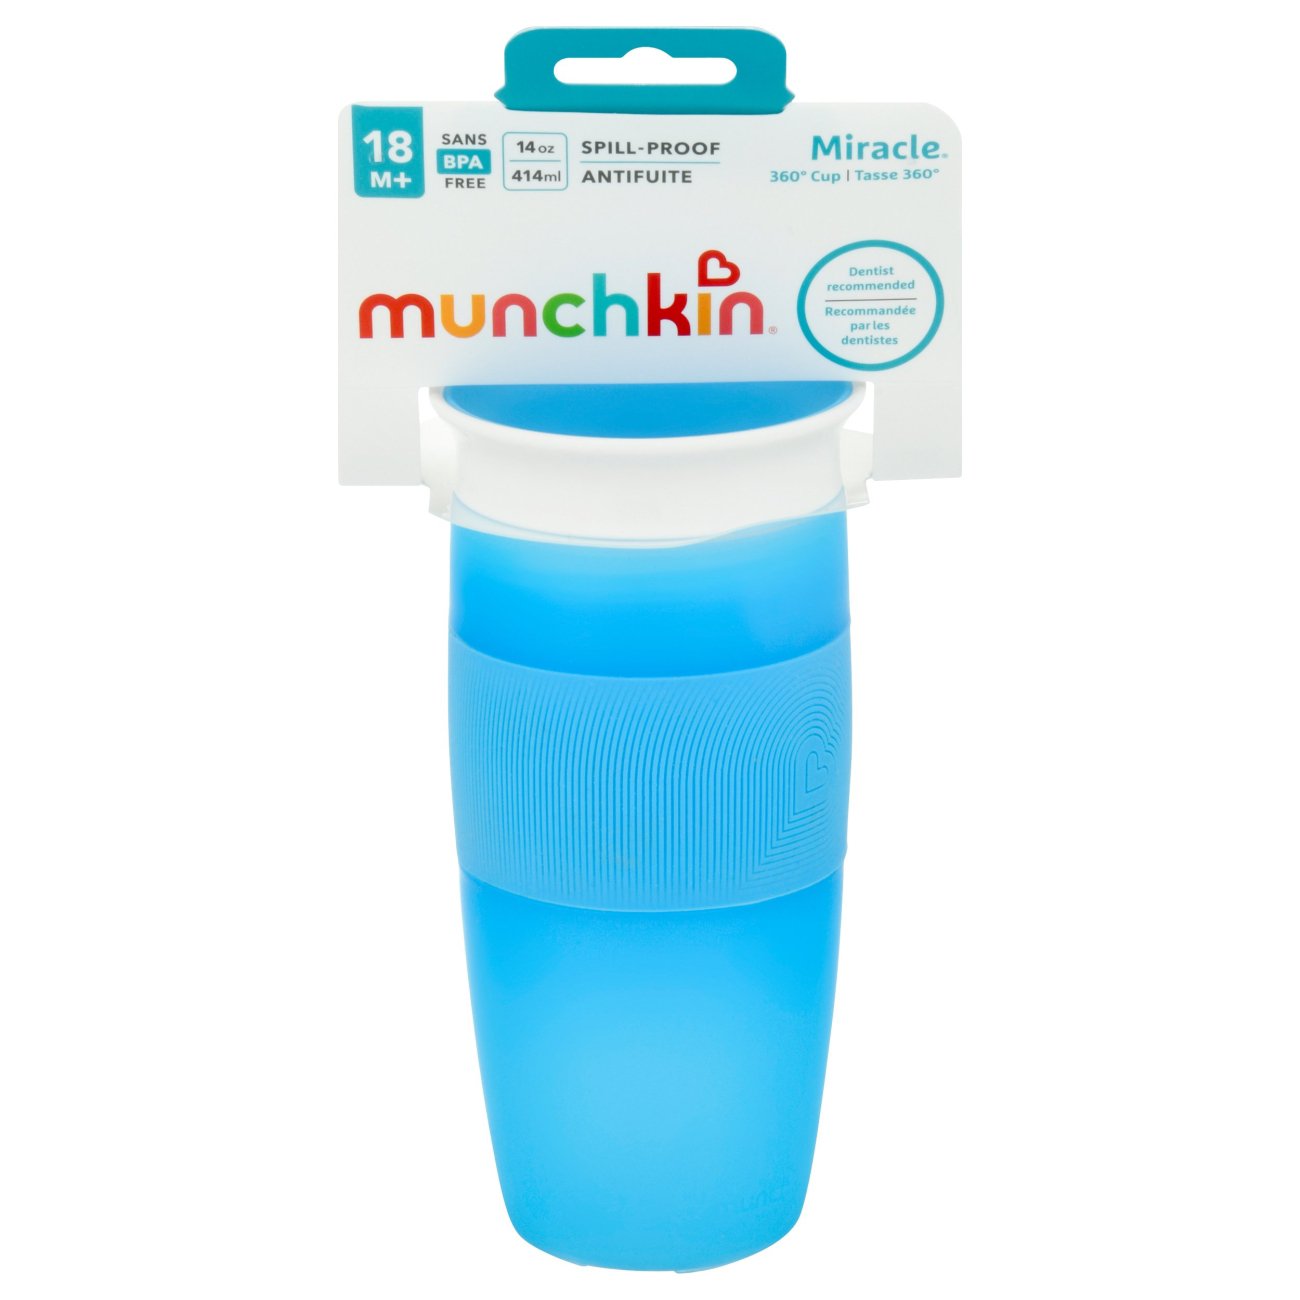 Tasse miracle 360° Munchkin